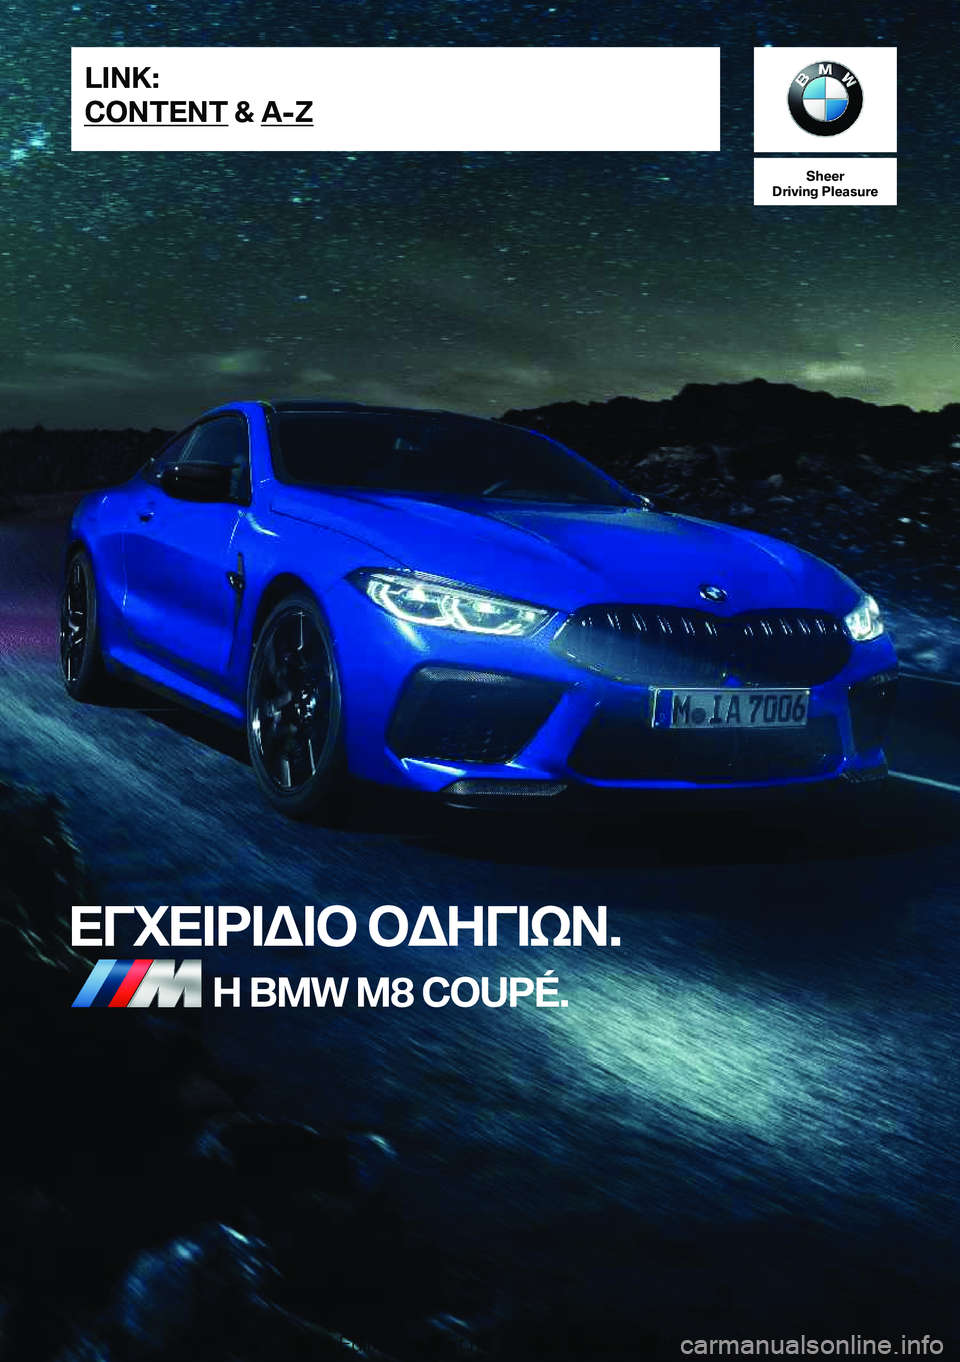 BMW M8 2020  ΟΔΗΓΌΣ ΧΡΉΣΗΣ (in Greek) �S�h�e�e�r
�D�r�i�v�i�n�g��P�l�e�a�s�u�r�e
XViX=d=W=b�bWZV=kA�.Z��B�M�W��M�8��C�O�U�P�